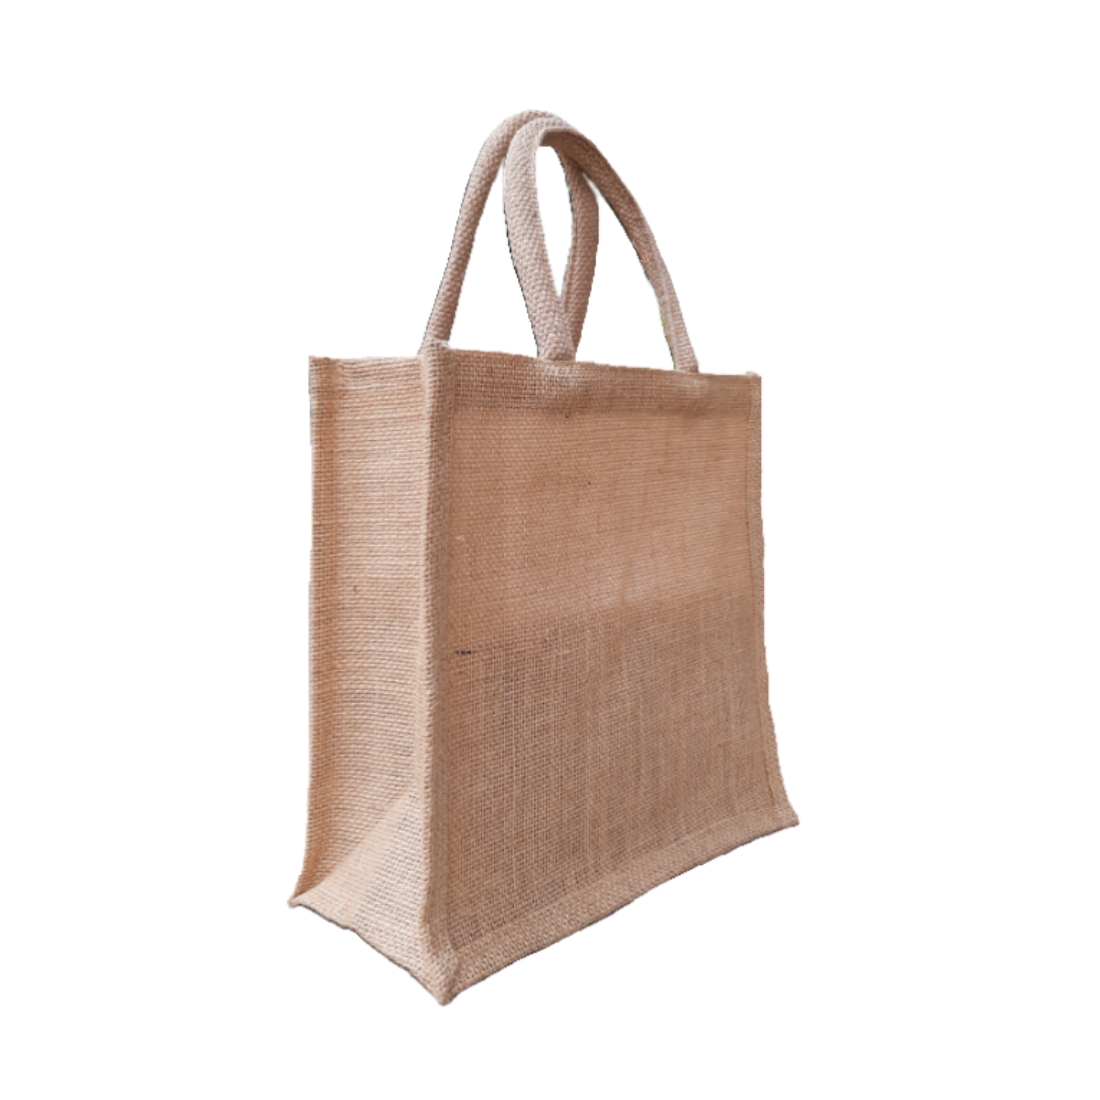 Eco friendly Natural Jute bag